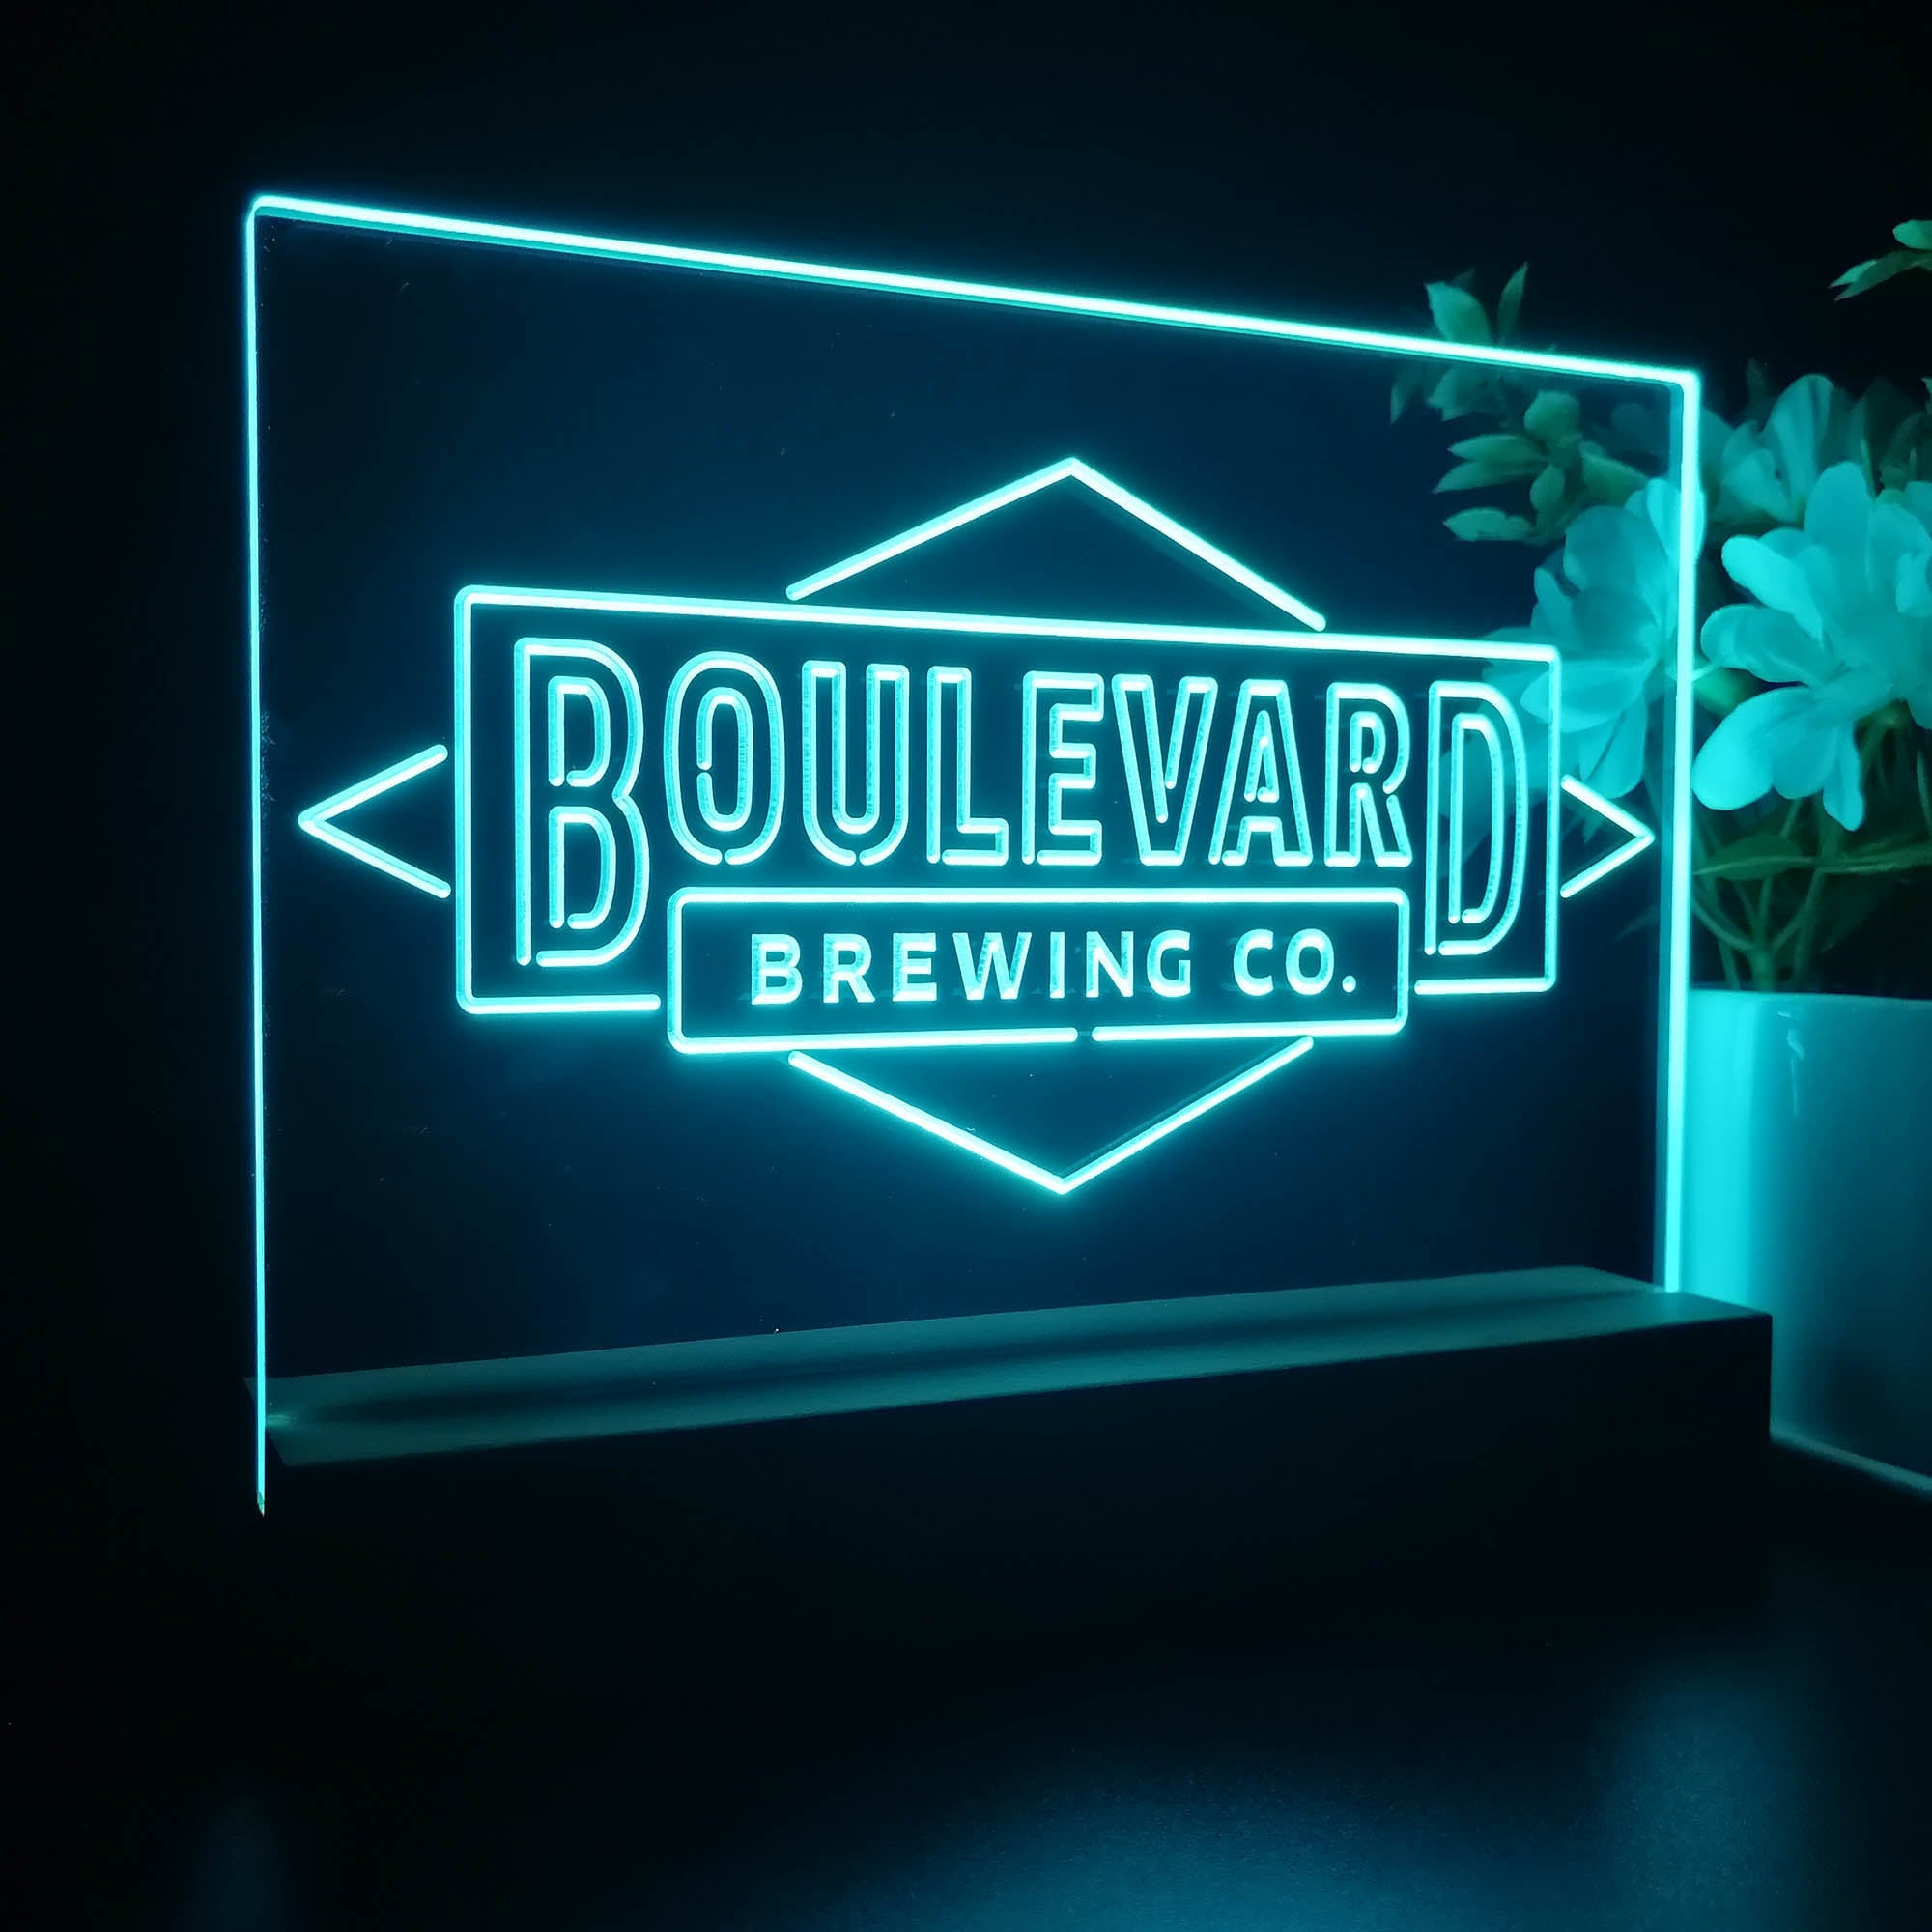 Boulevard Brewing Co. Neon Sign Pub Bar Decor Lamp